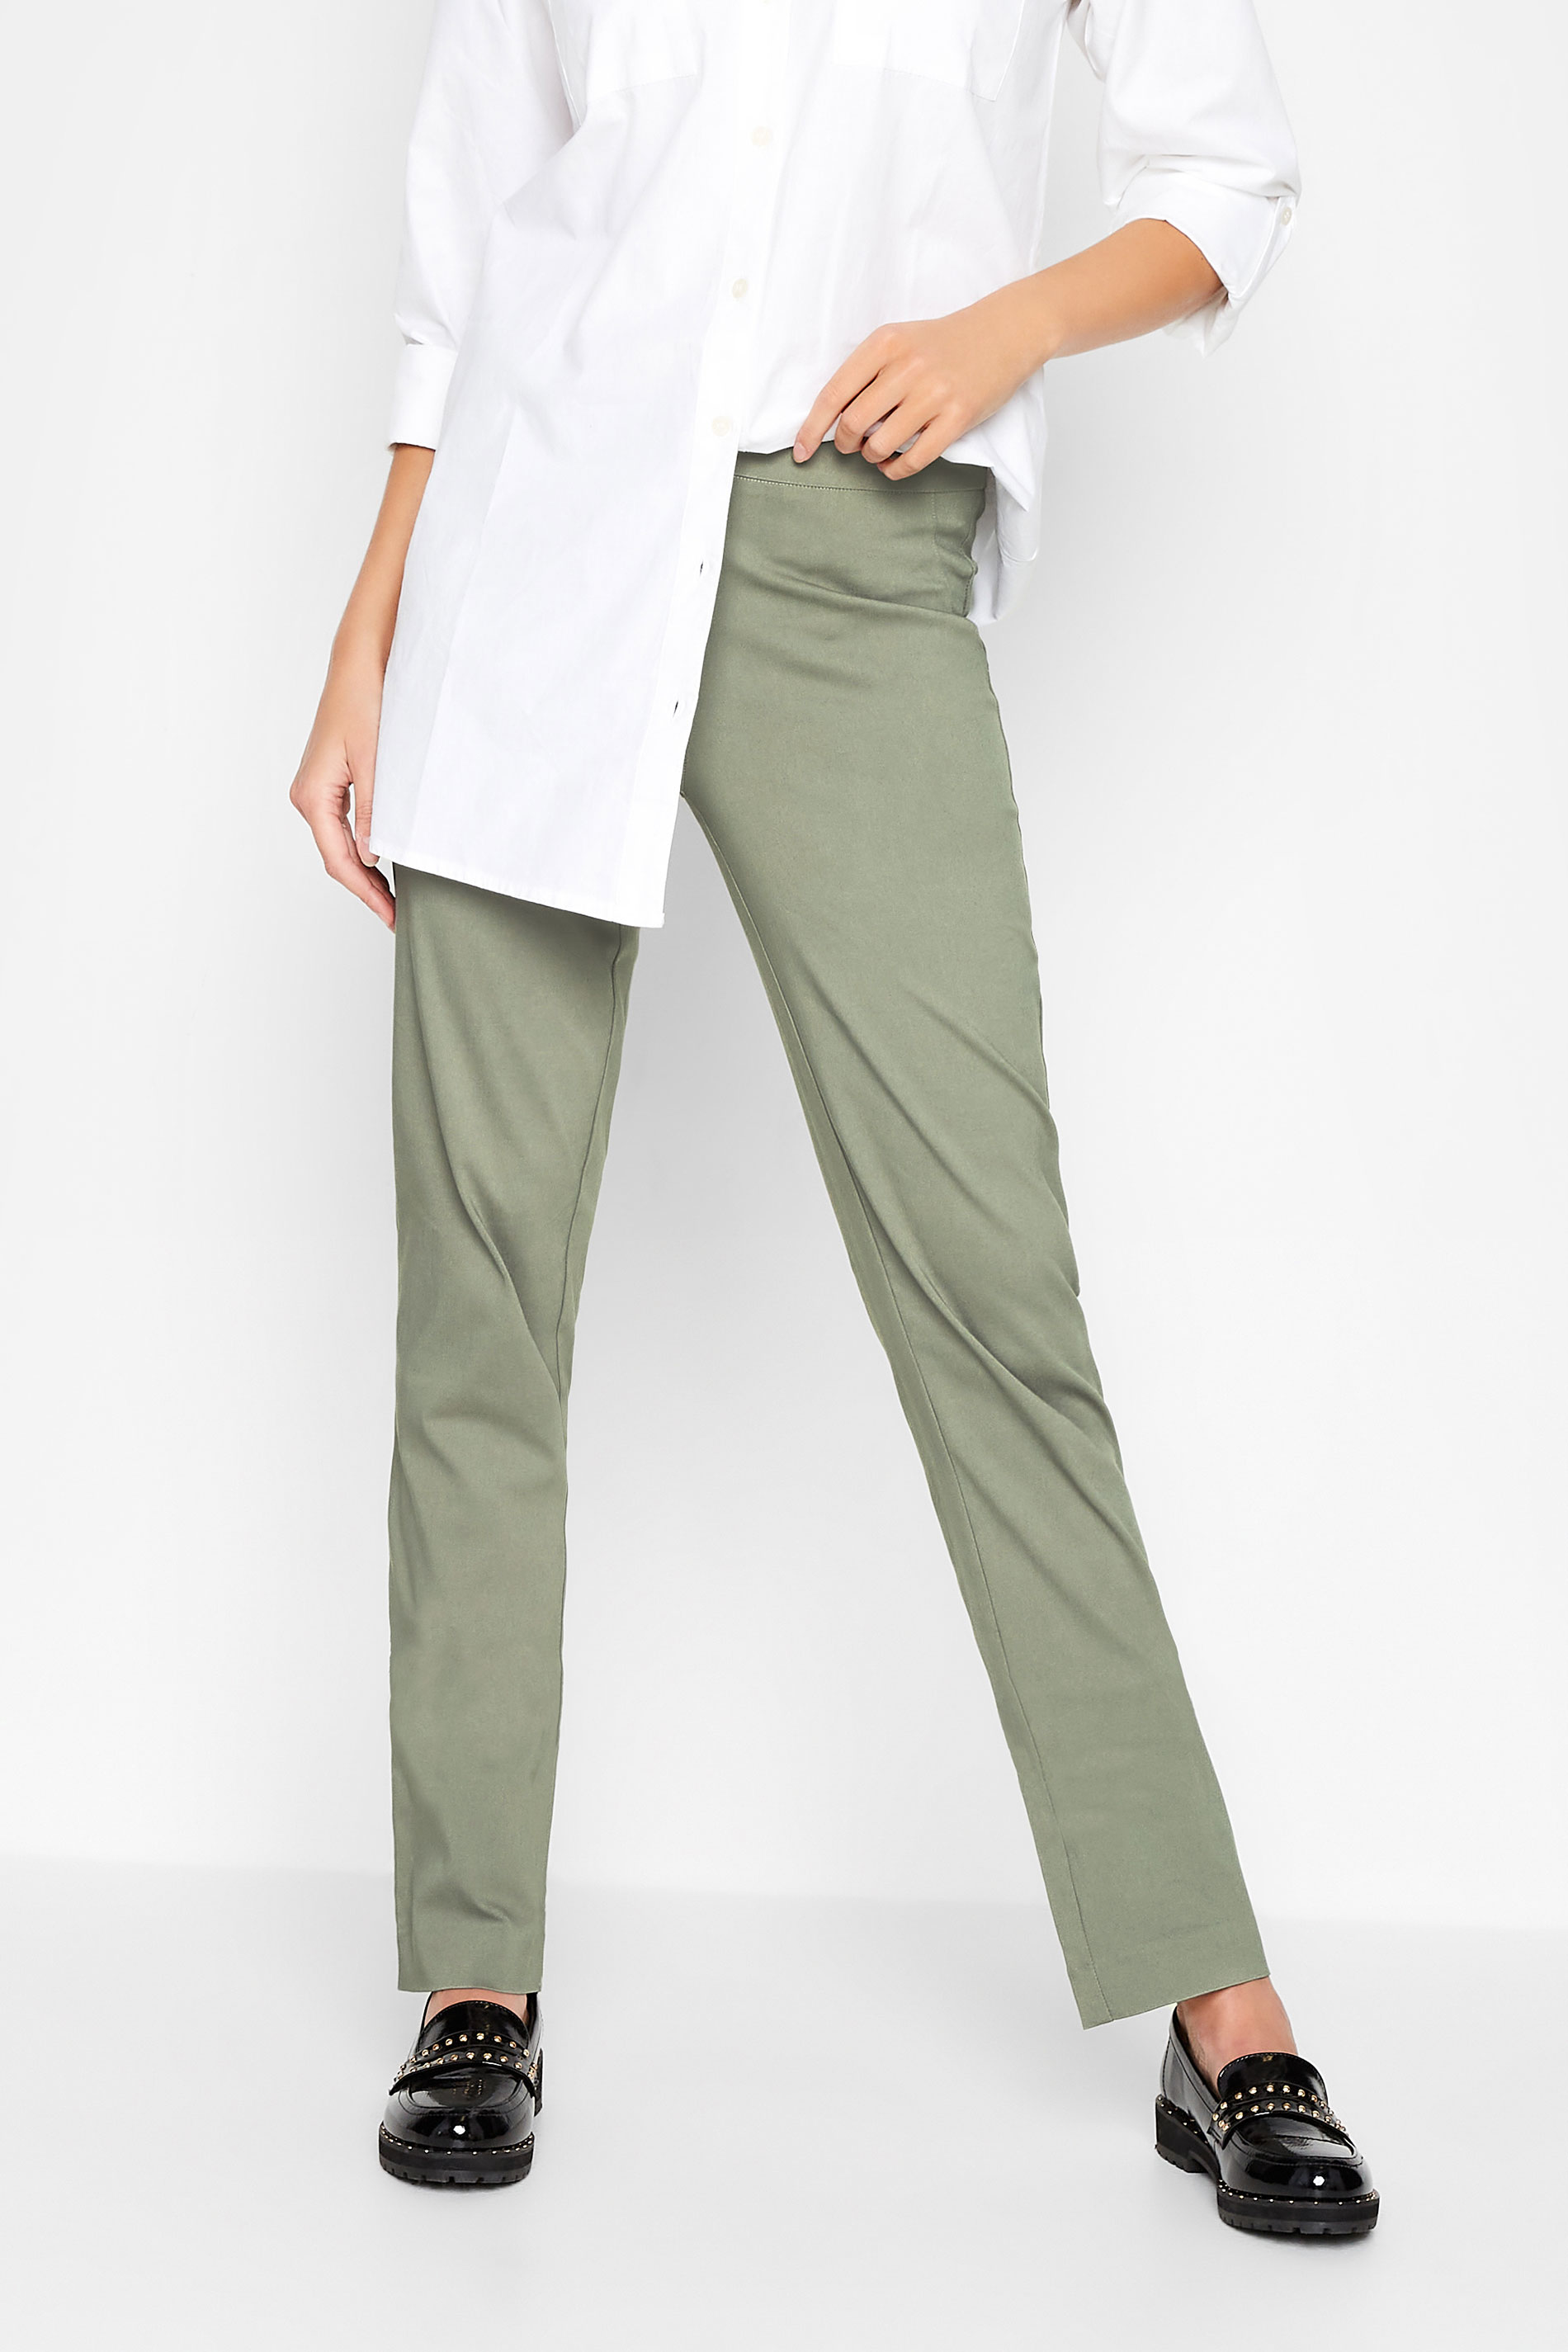 LTS Tall Women's Green Straight Leg Trousers | Long Tall Sally 1